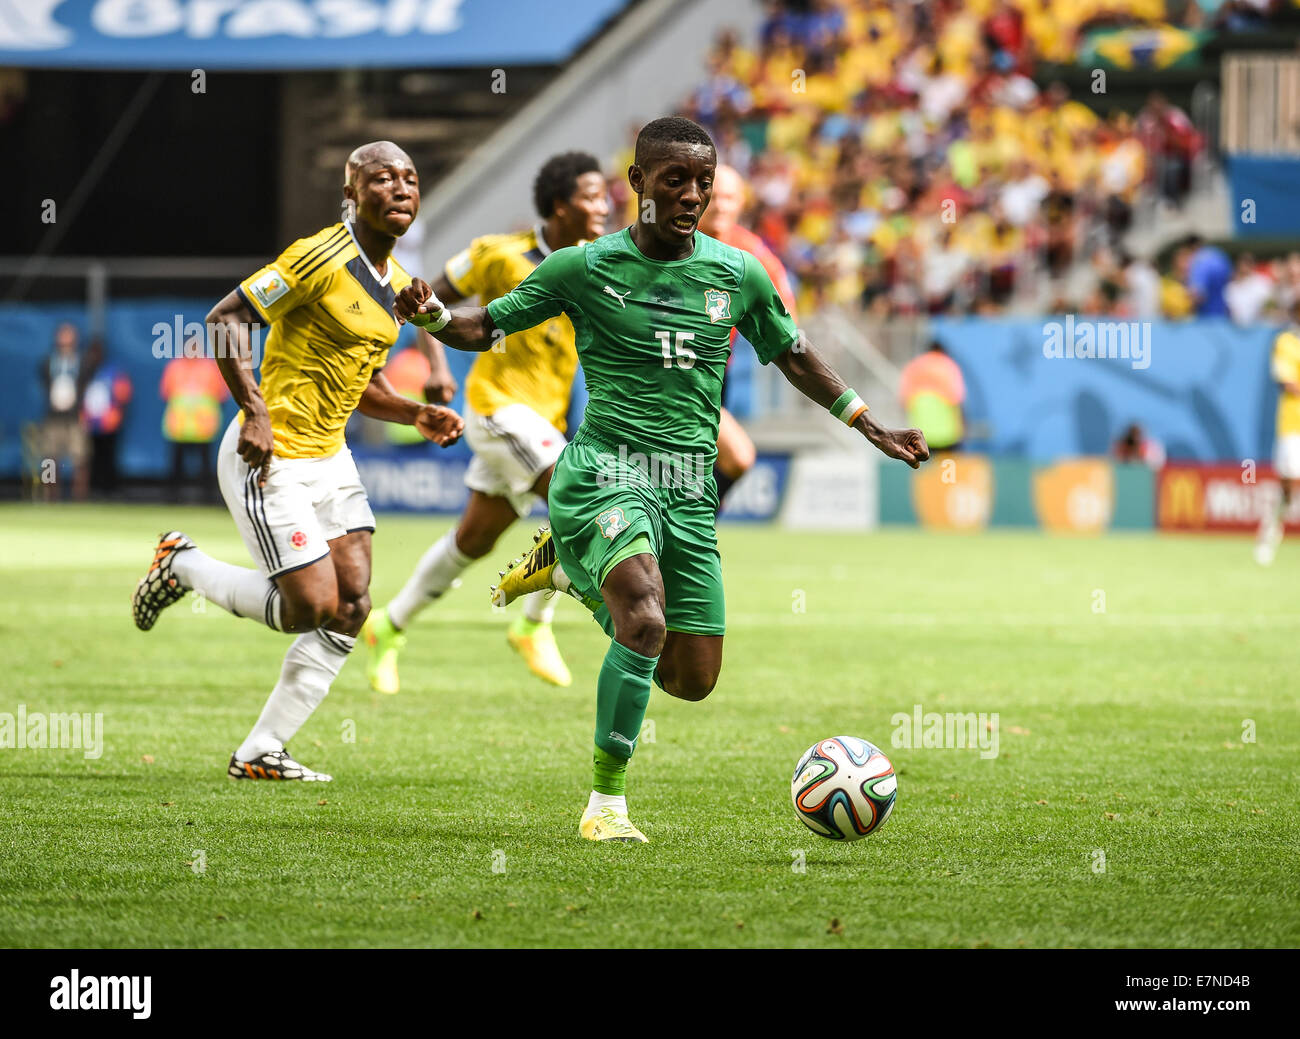 Max Gradel. Colombia v Ivory Coast. Group match. FIFA World Cup 2014 Brazil. National stadium, Brasilia. 19 Jun 2014. Stock Photo